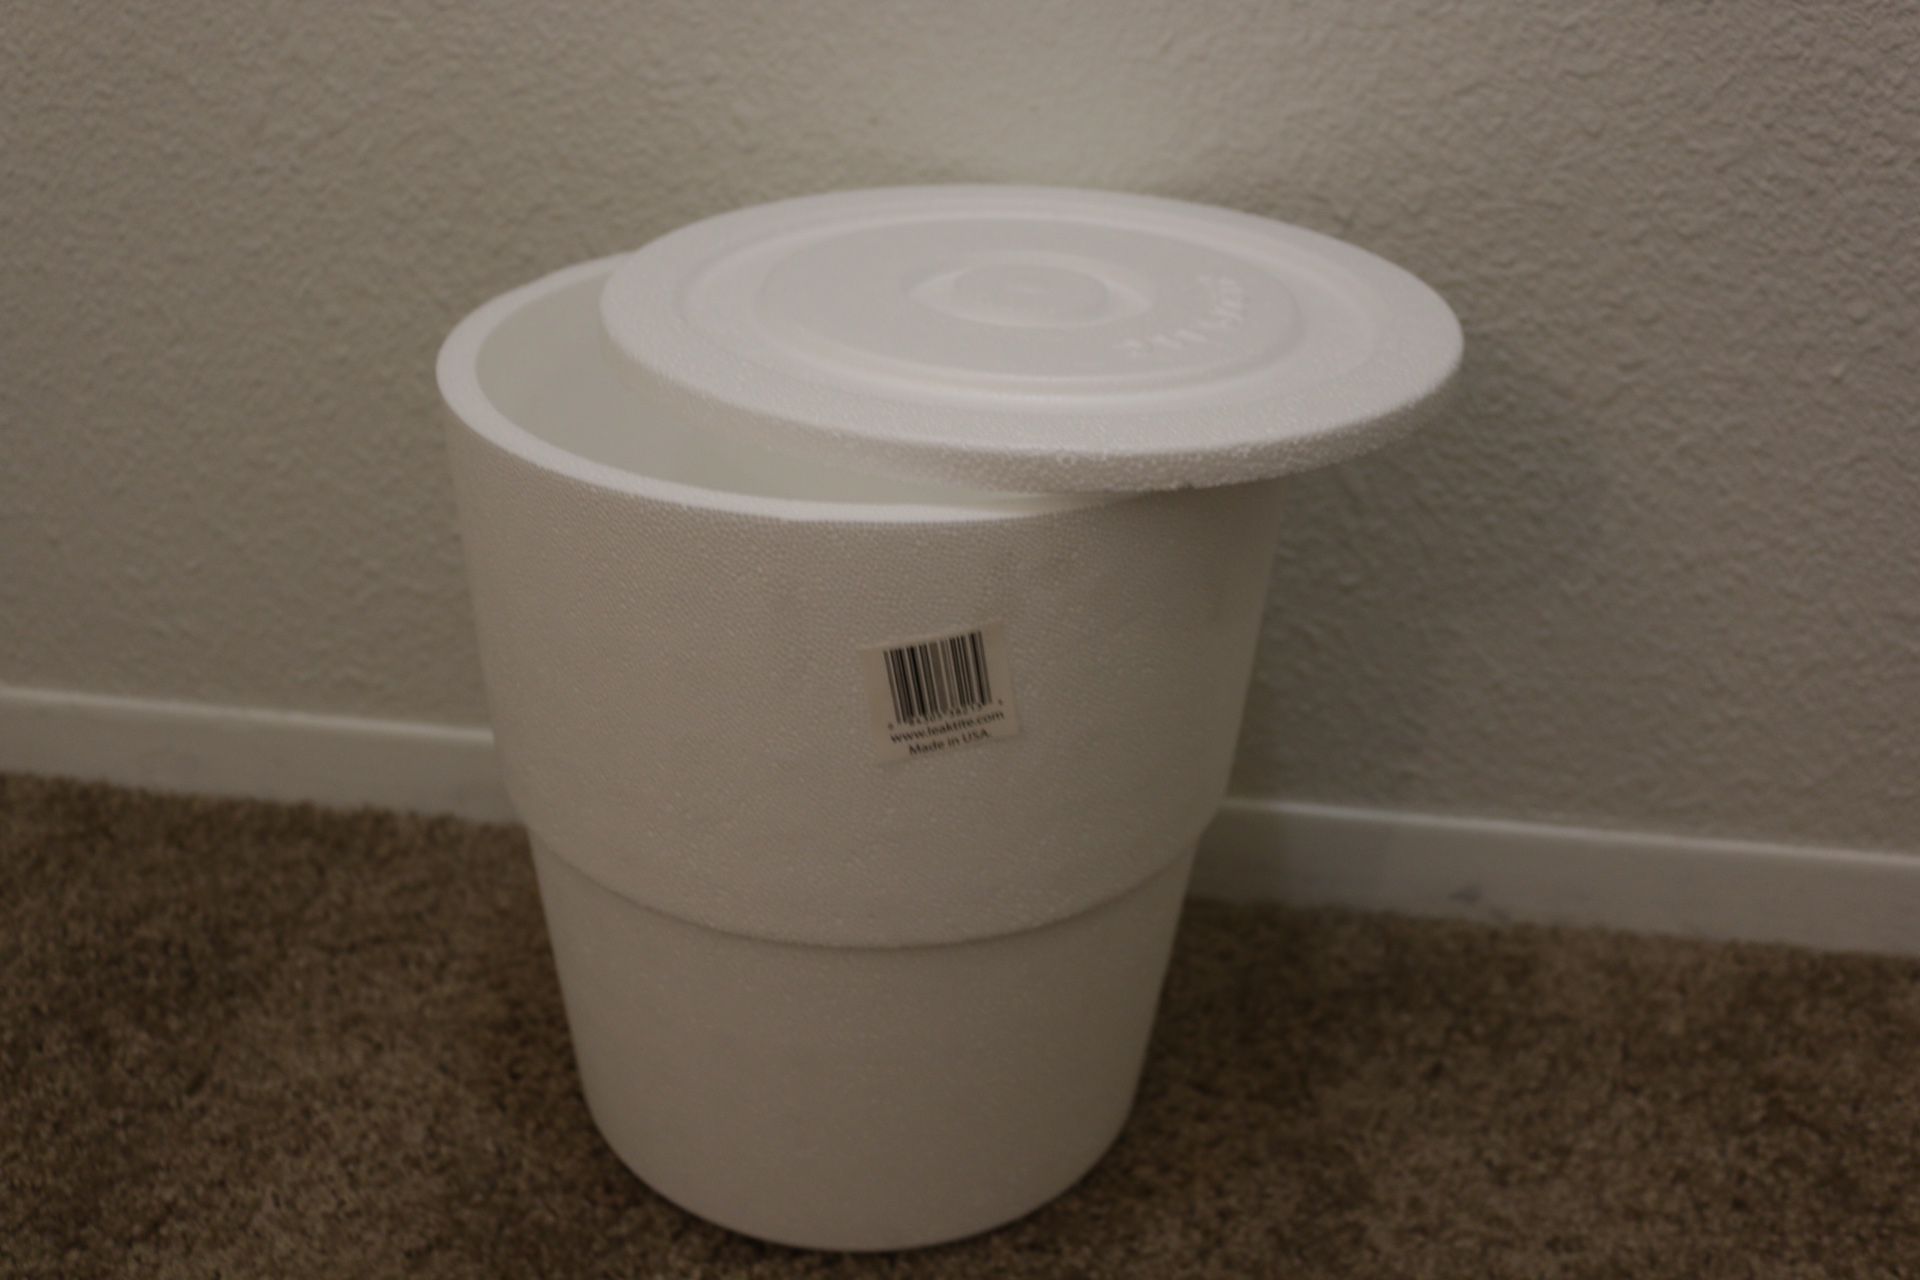 Leaktite 5-gal. Bucket Companion Cooler